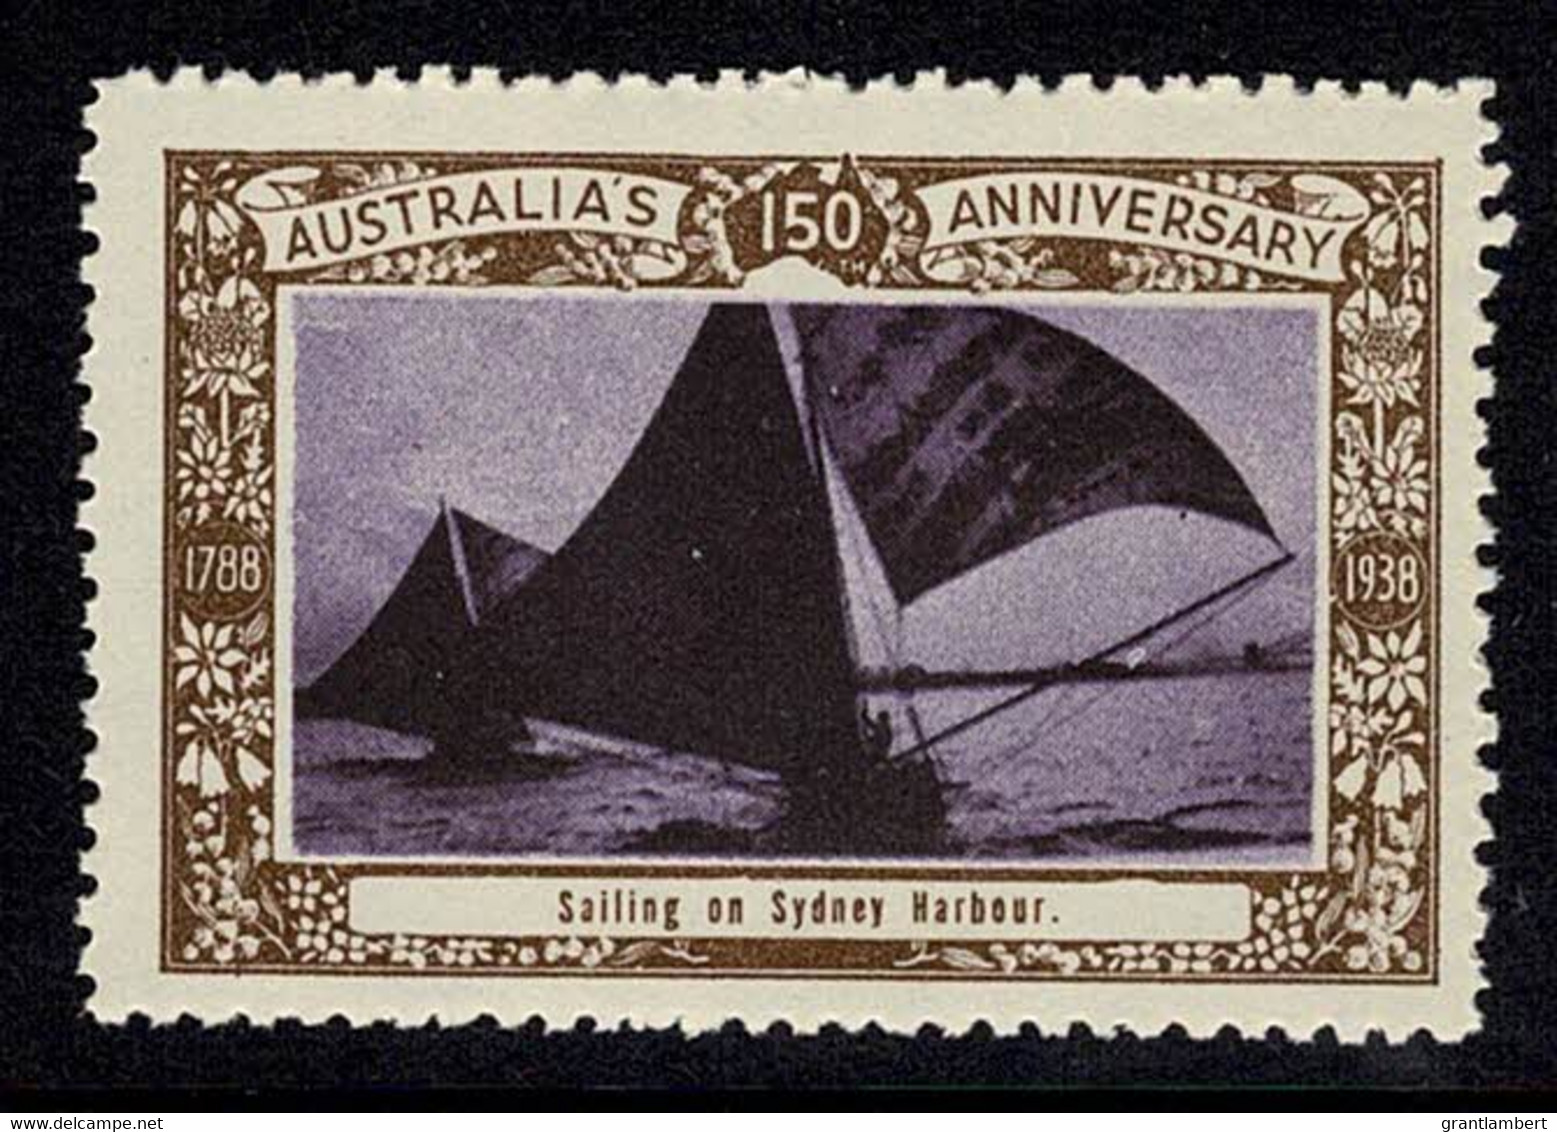 Australia 1938 Sailing On Sydney Harbour - NSW 150th Anniversary Cinderella MNH - Cinderella